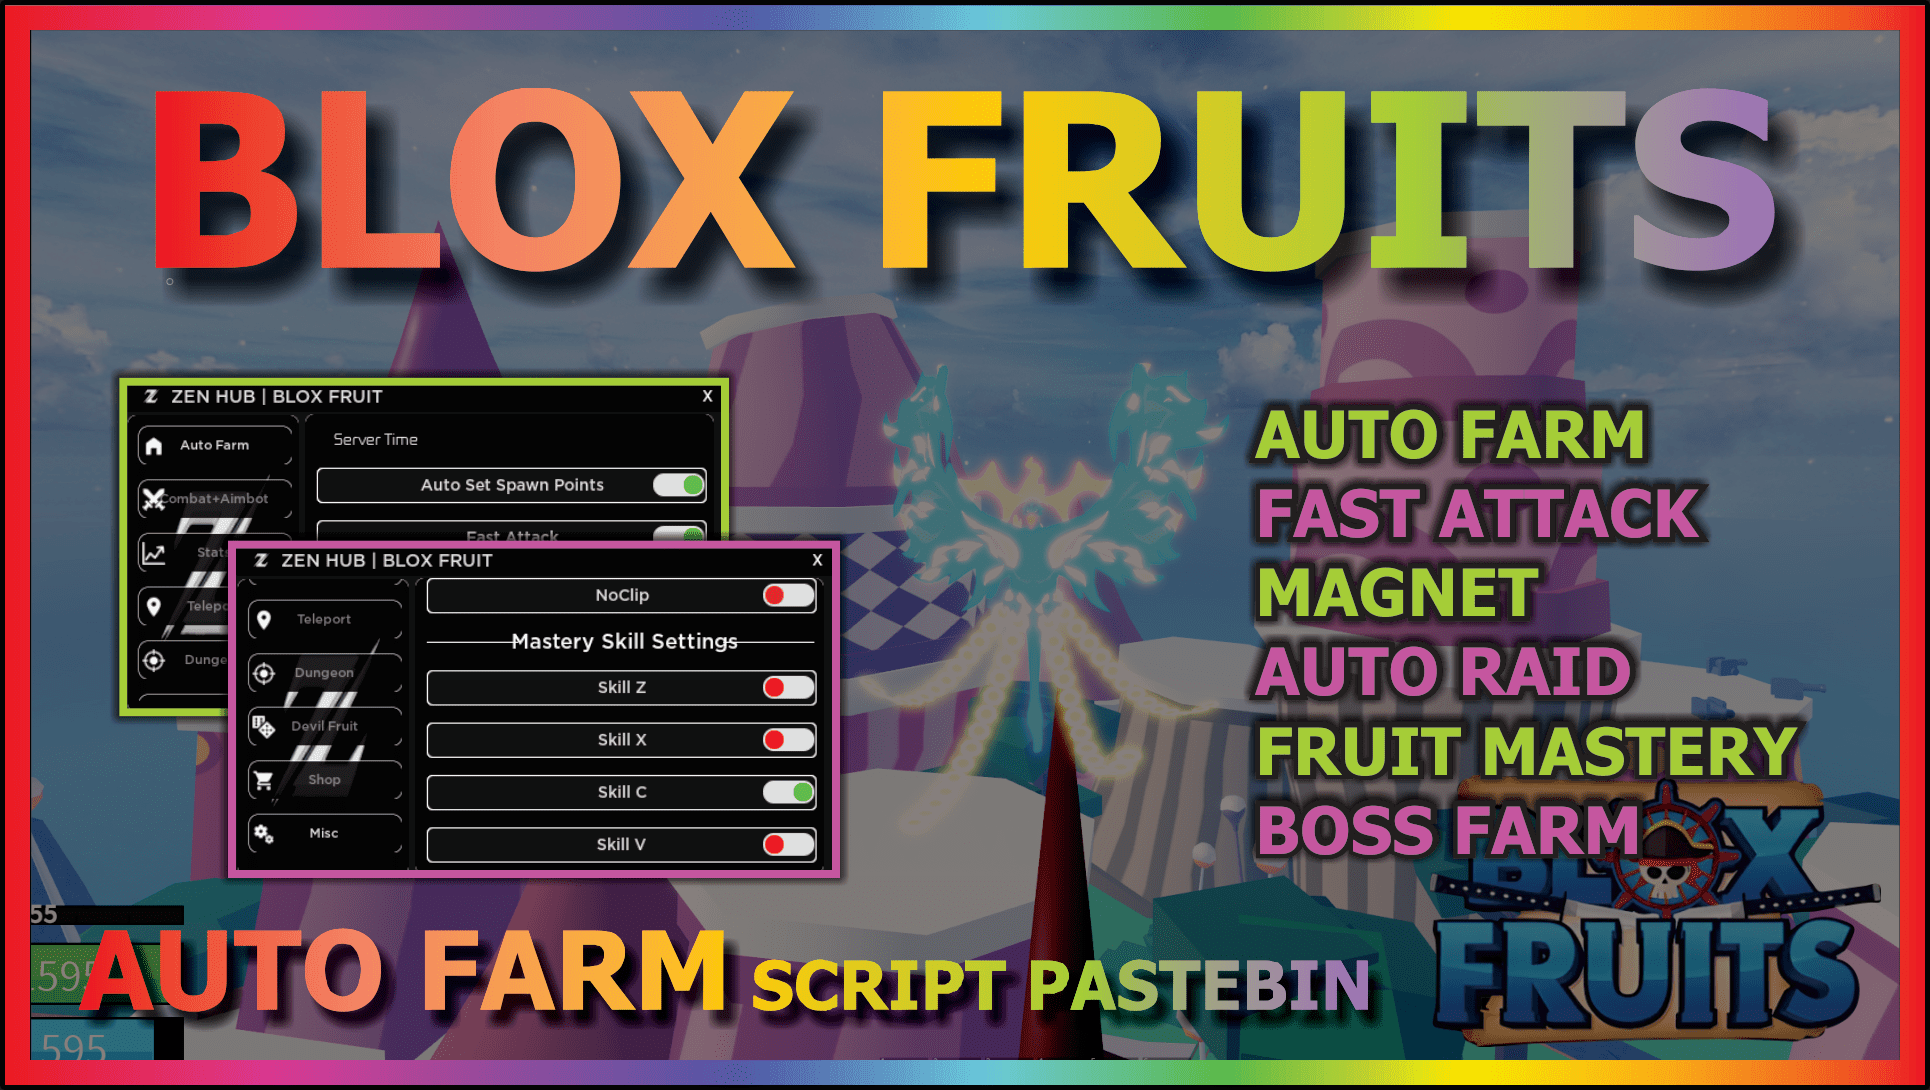 Auto farm blox fruit script pastebin